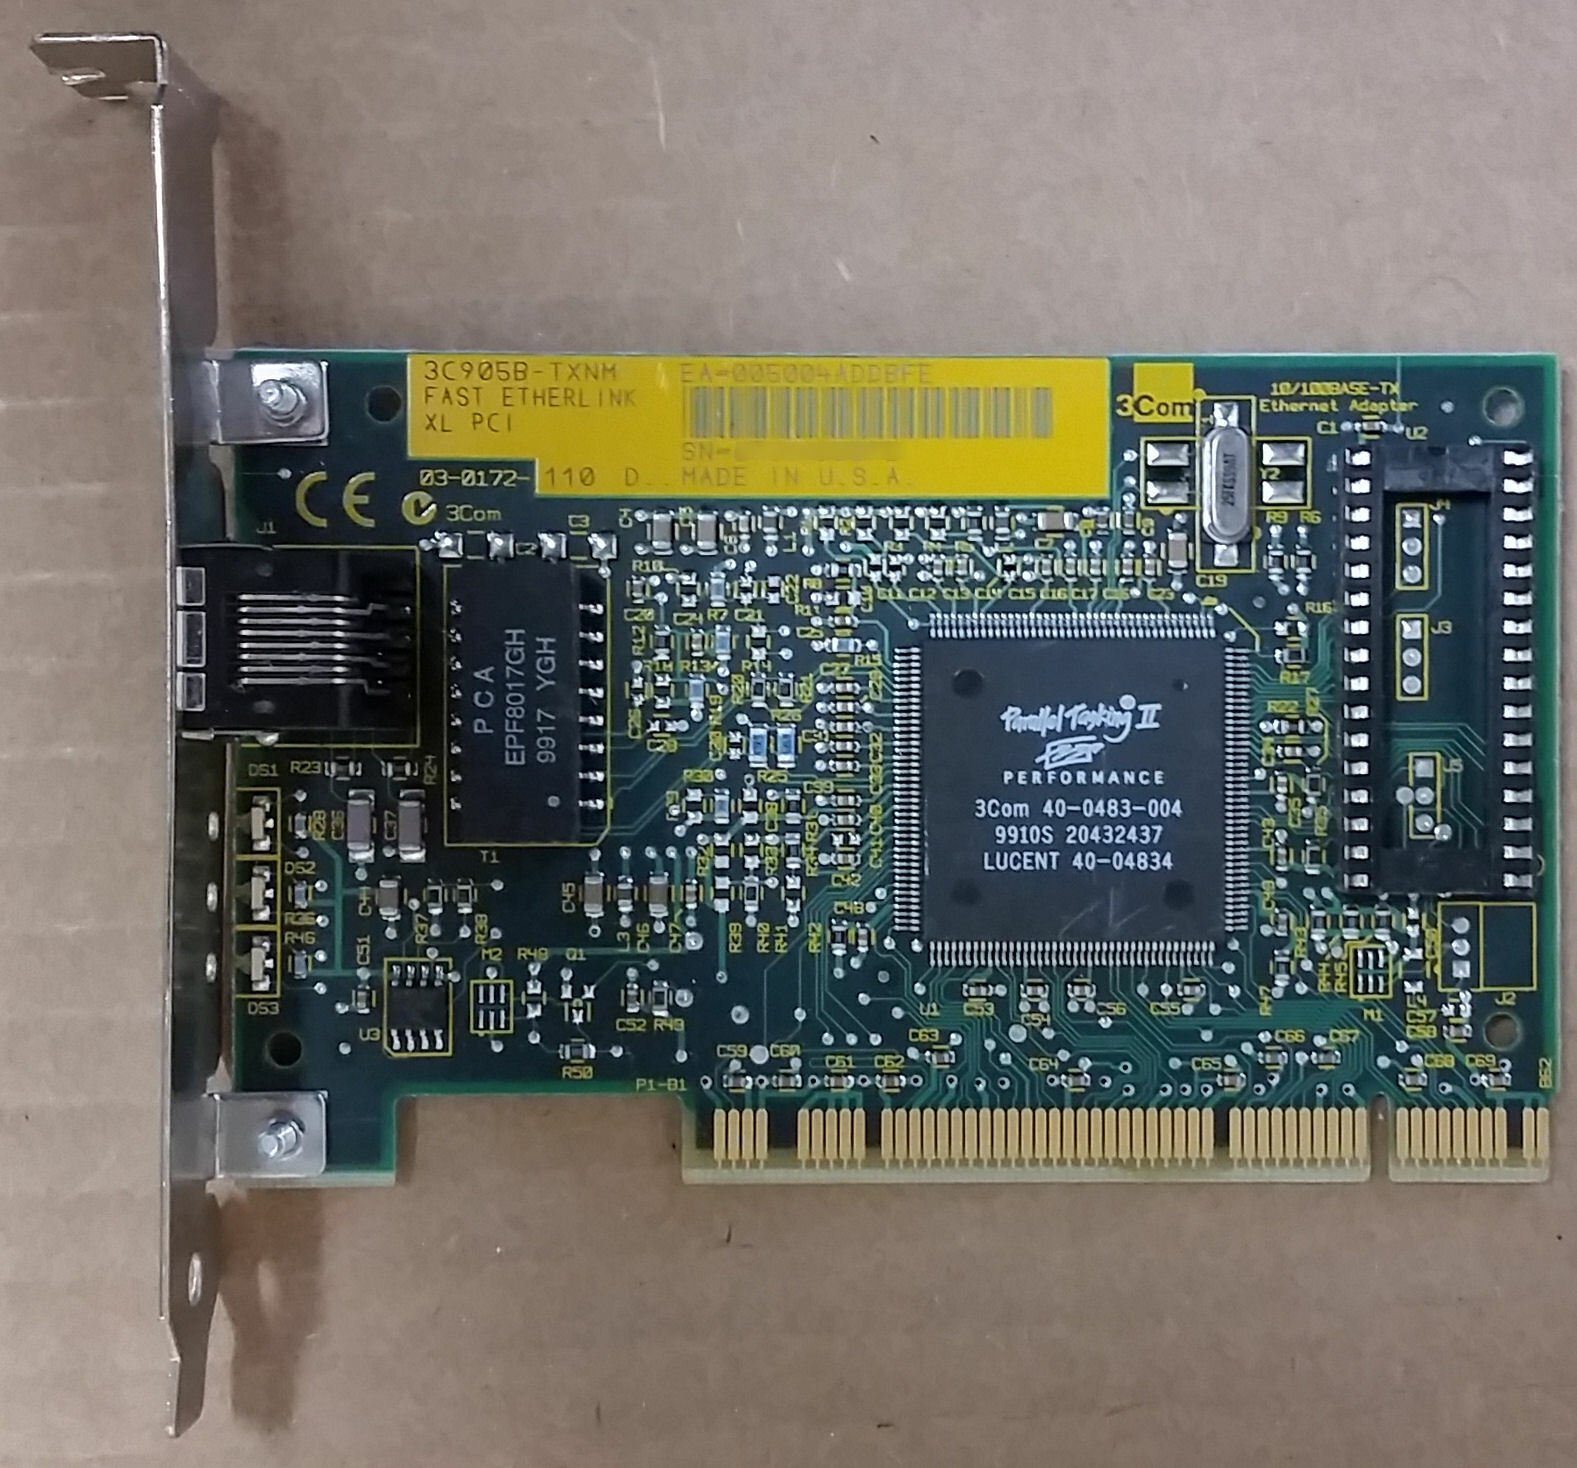 3Com Fast Etherlink XL PCI, 3C905B-TXNM , 03-0172-110 D, Refurbished